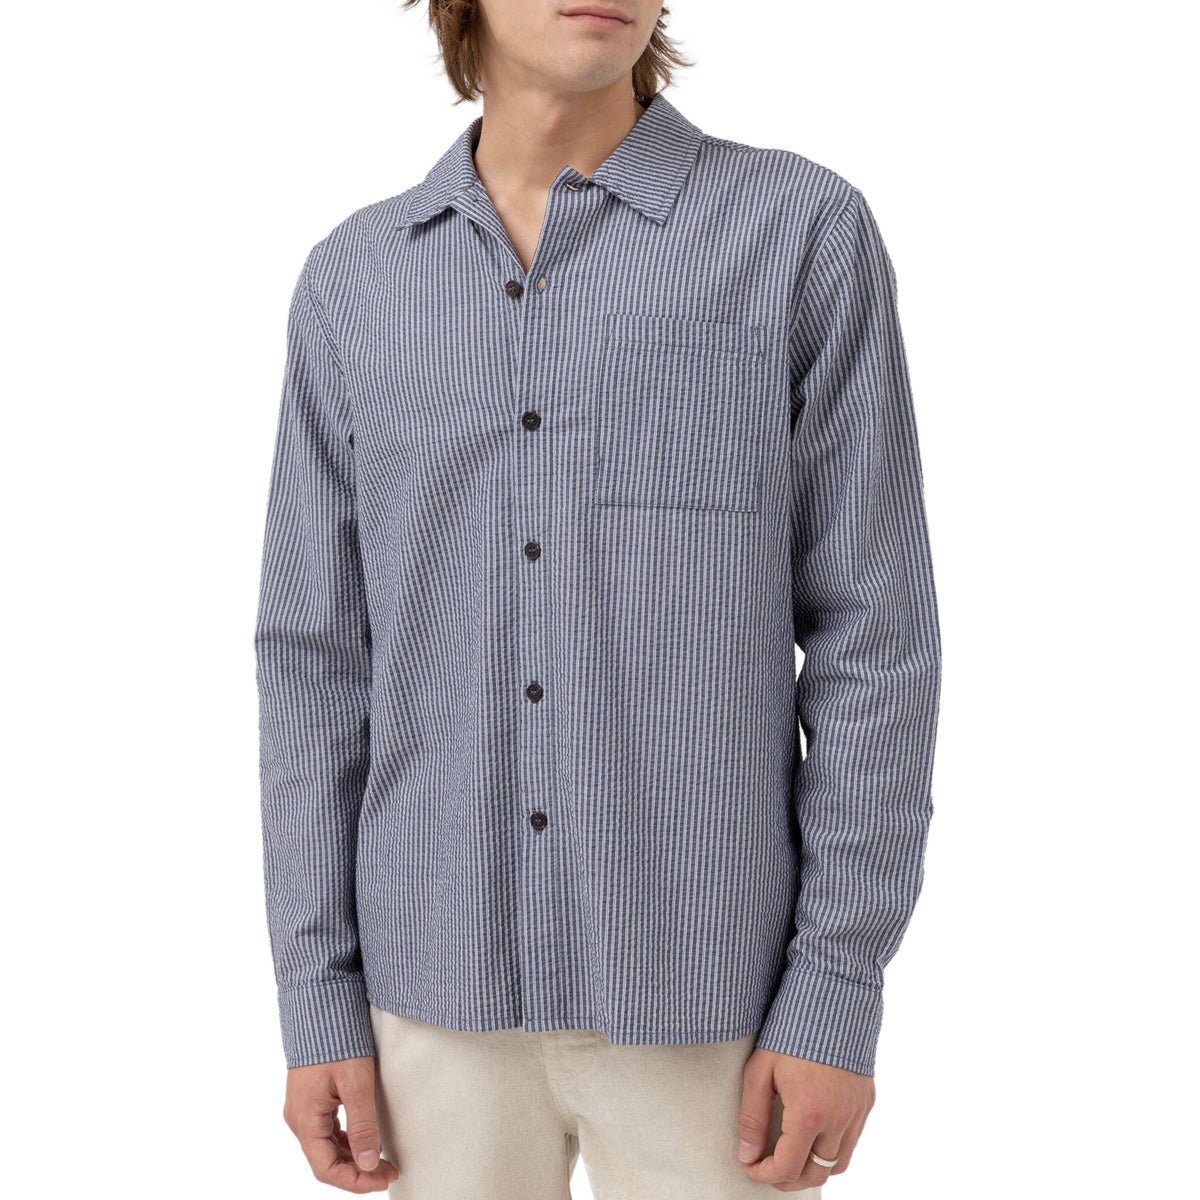 Rhythm Striped Seersucker Long Sleeve Shirt - Indigo image 1